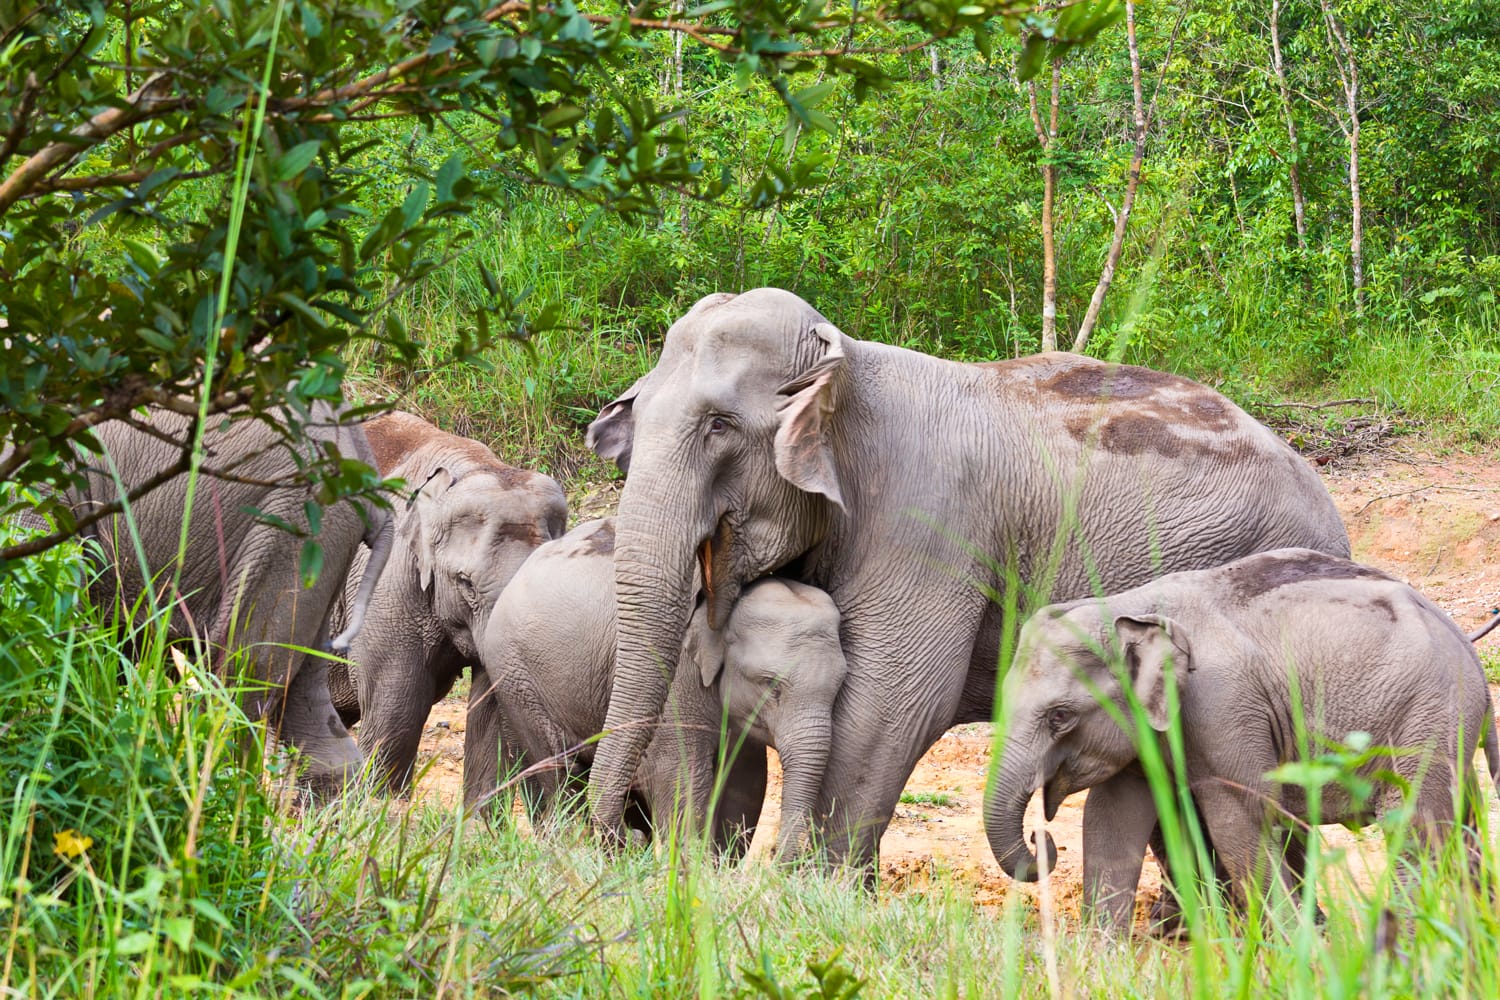 Elephants at Kui Buri National Park in Thailand